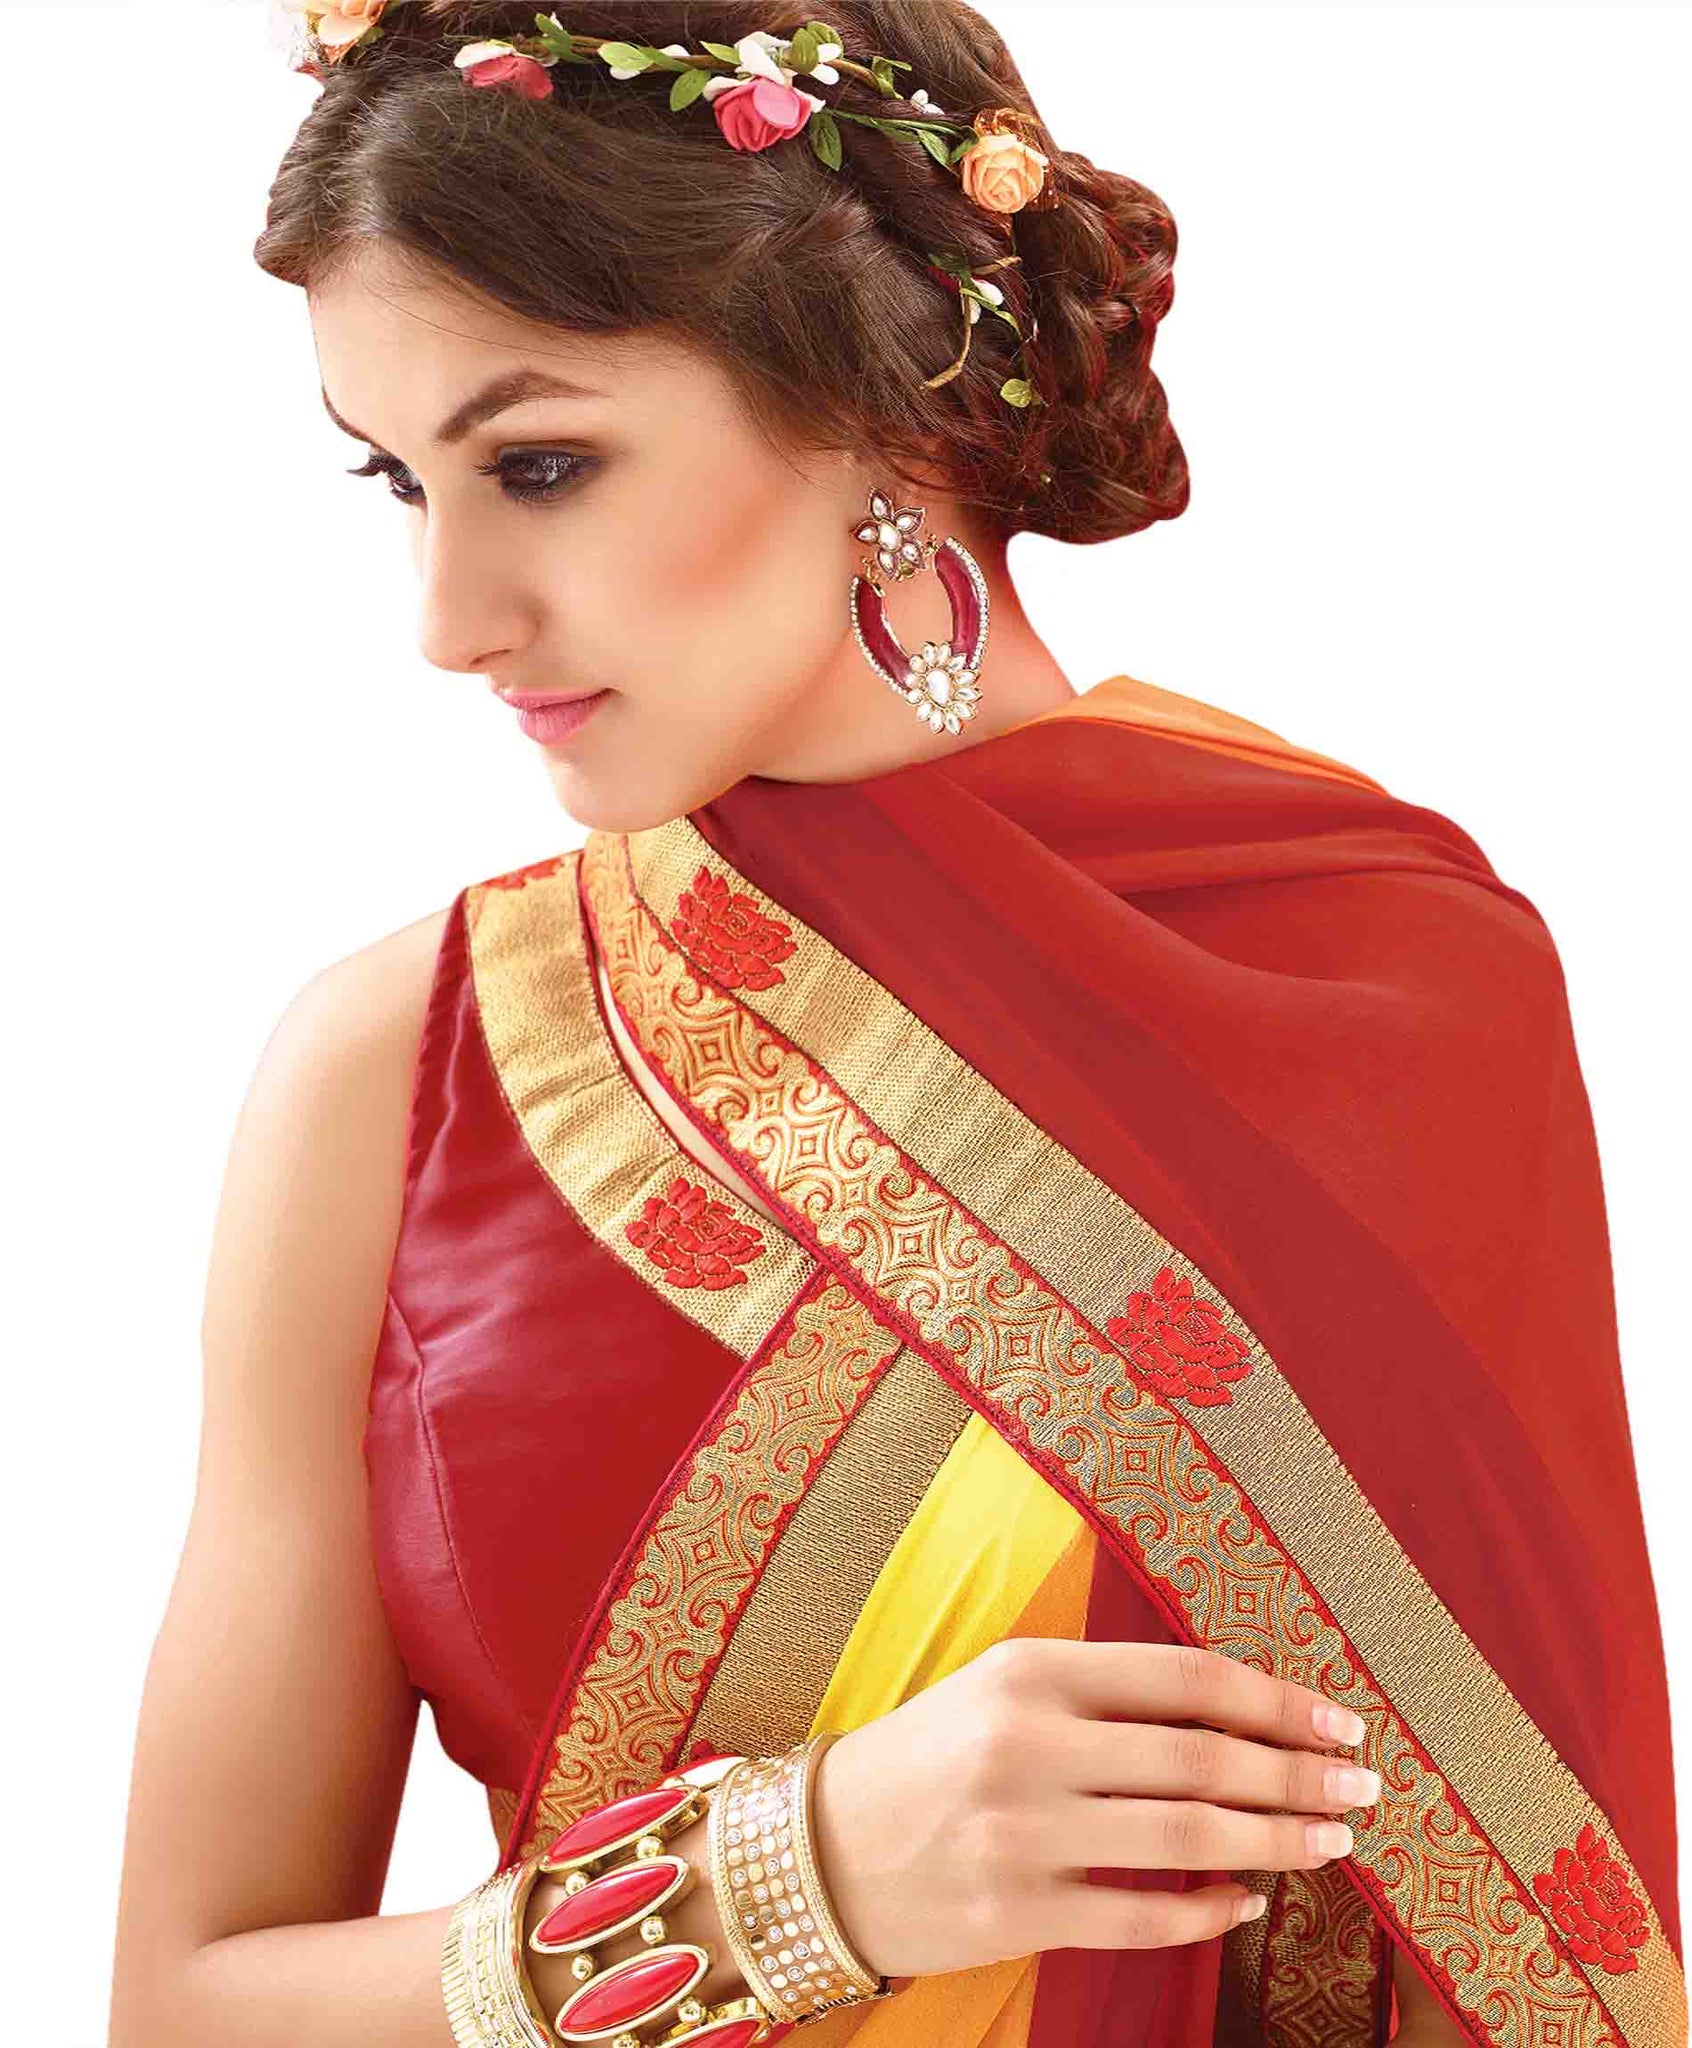 Samantha Akkineni Looks Gorgeous In This Regal Red Saree, Brides-To-Be Take  Notes! | IWMBuzz